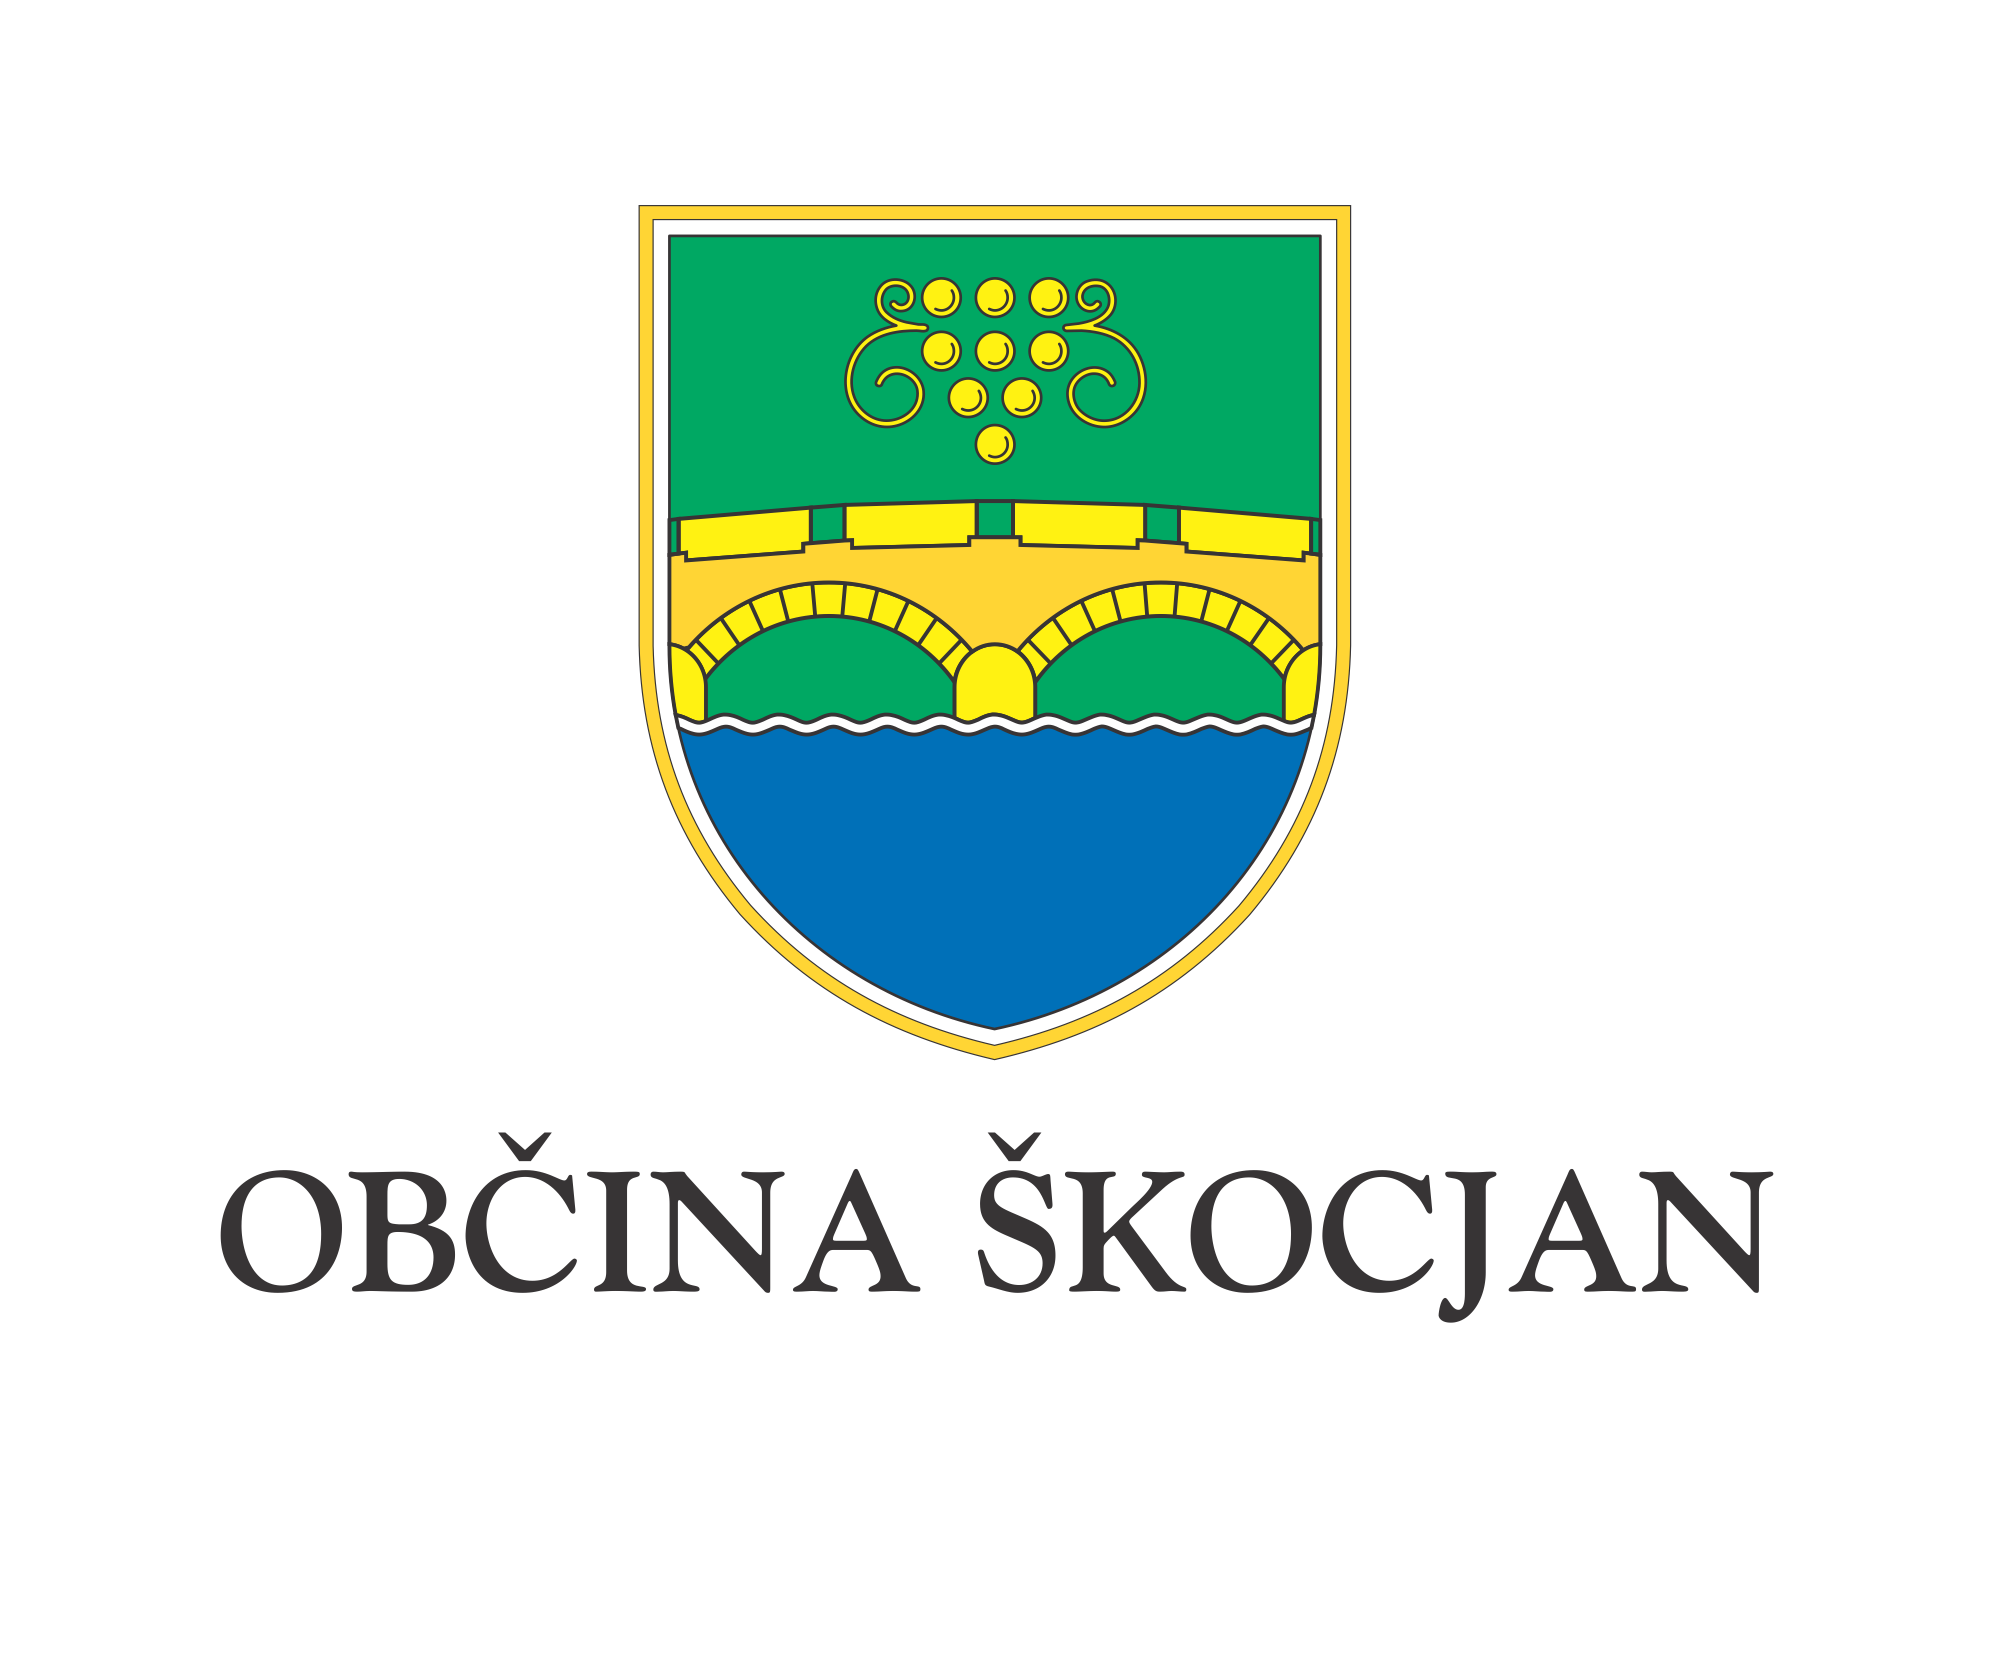 Grb Obcine Skocjan.png